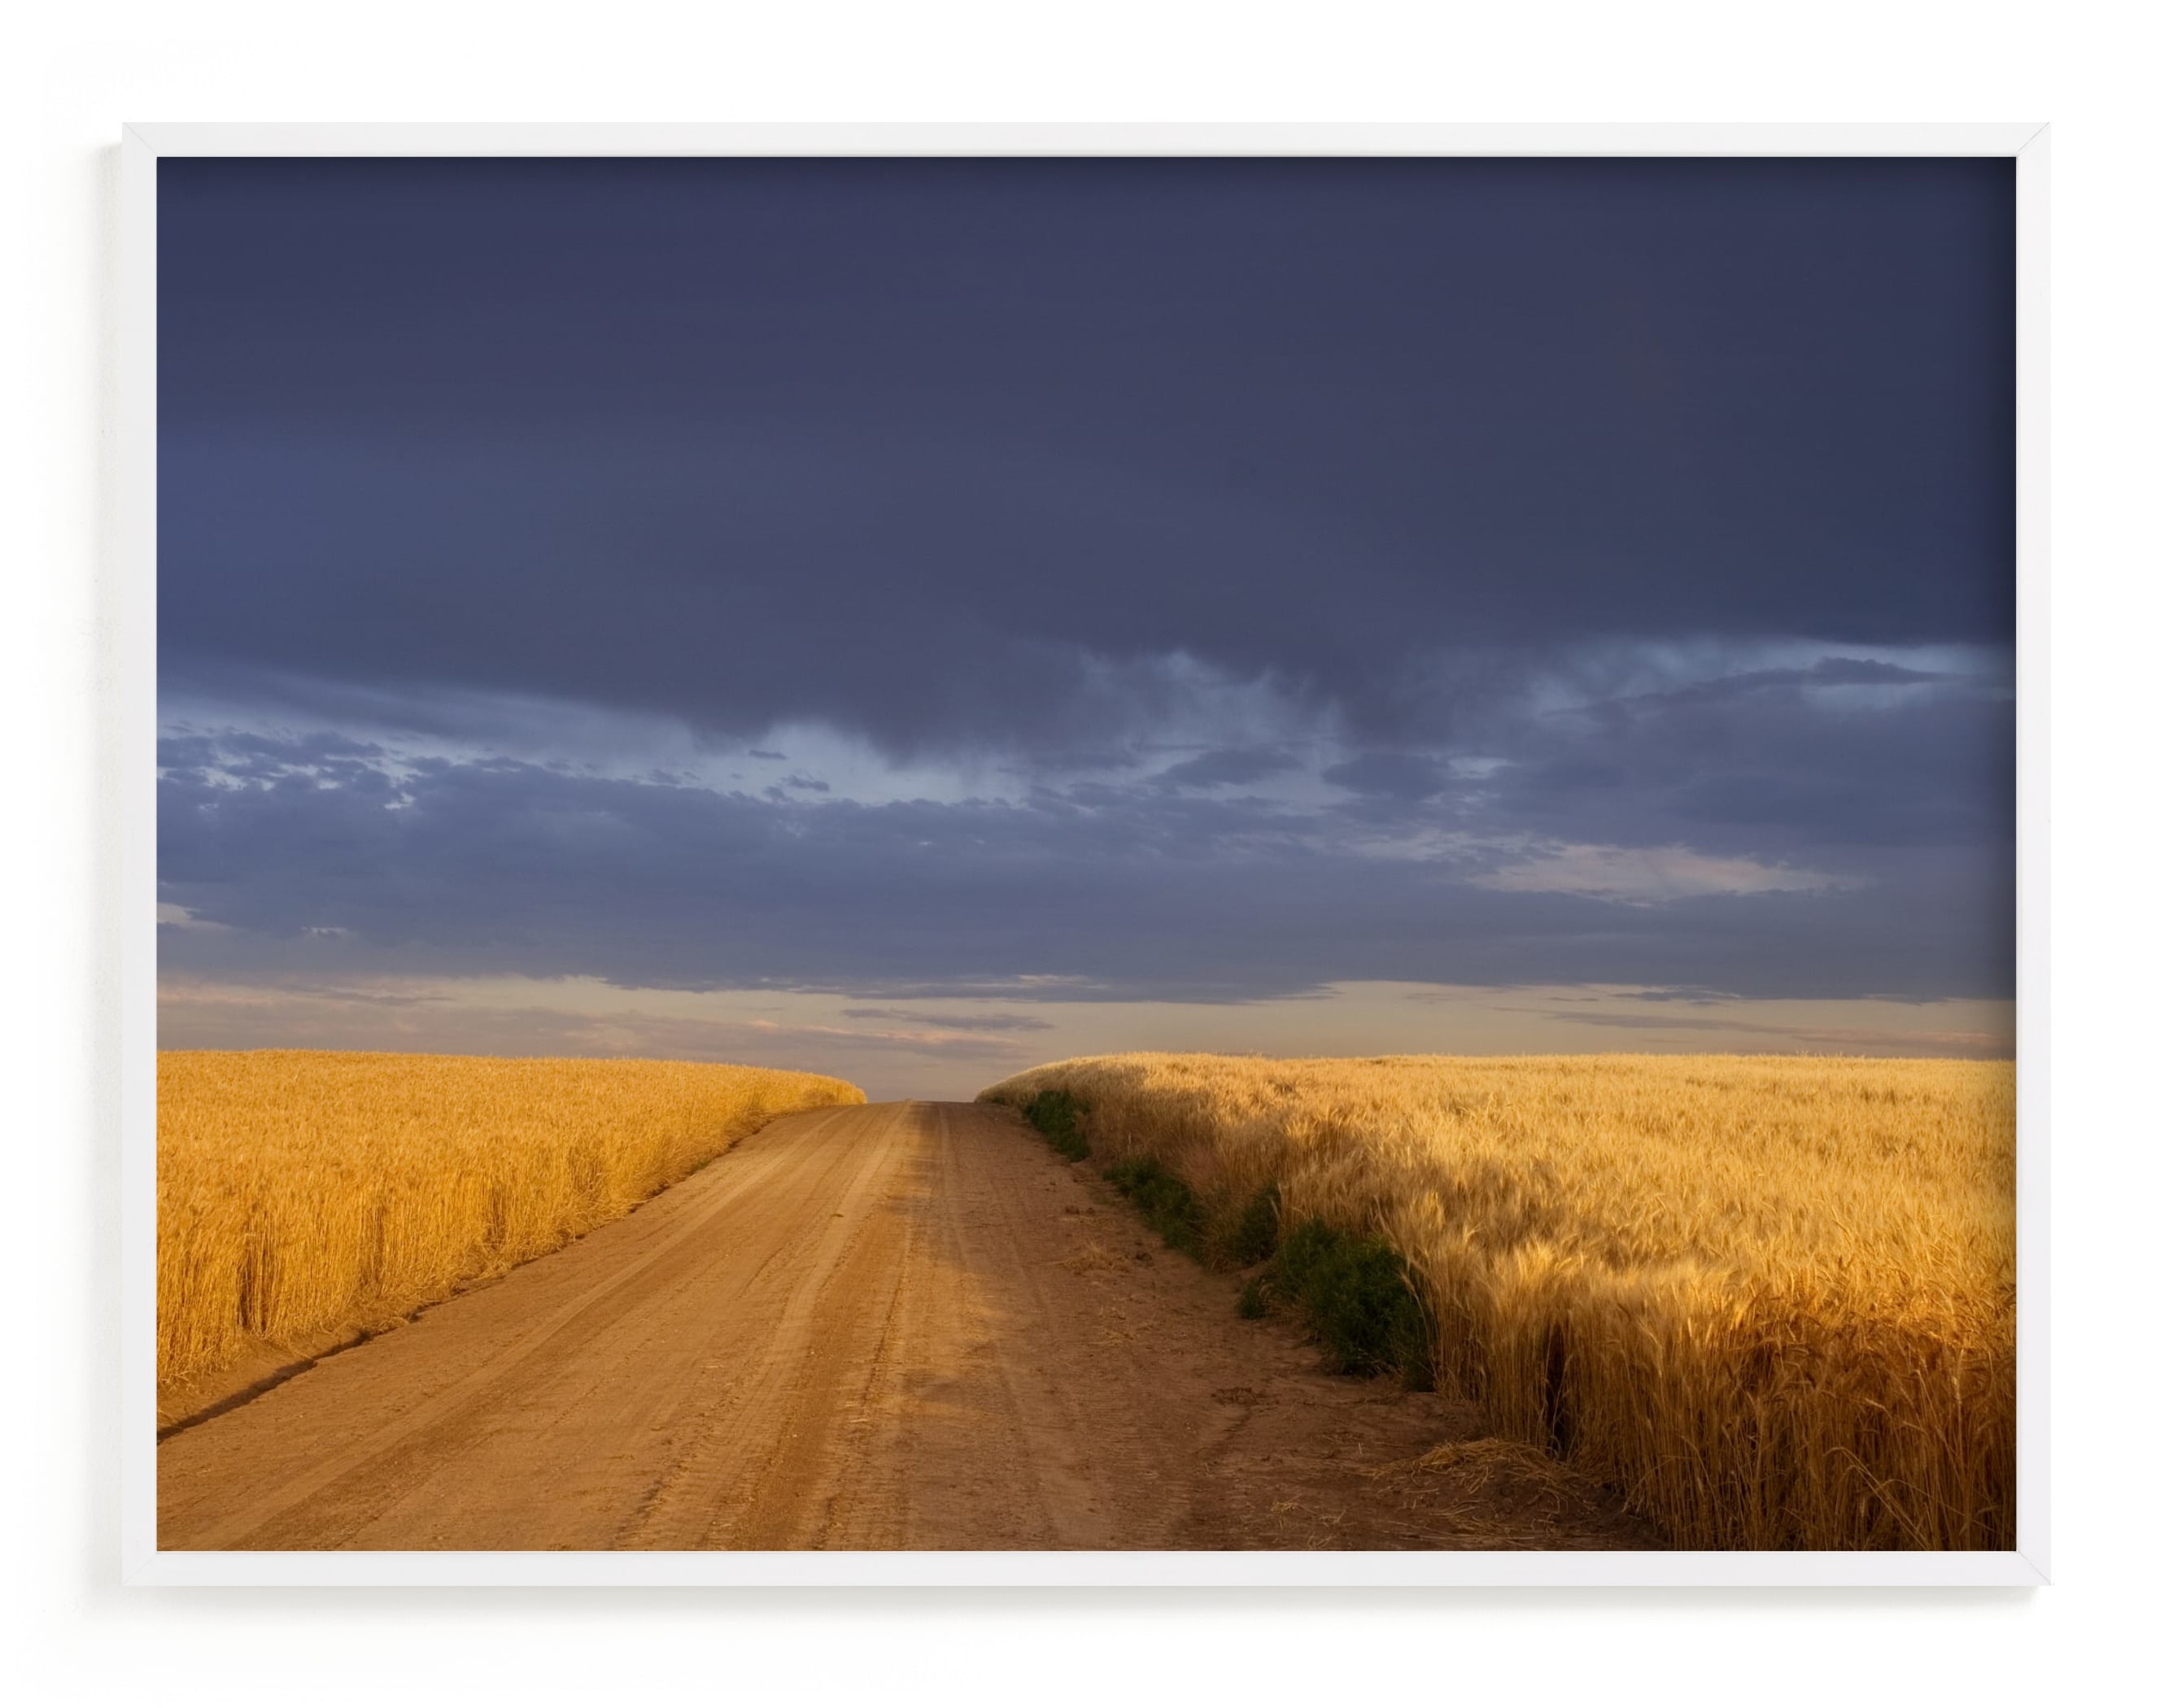 Dirt Road Through a Wheat Field Under a Stormy Sky Art Print